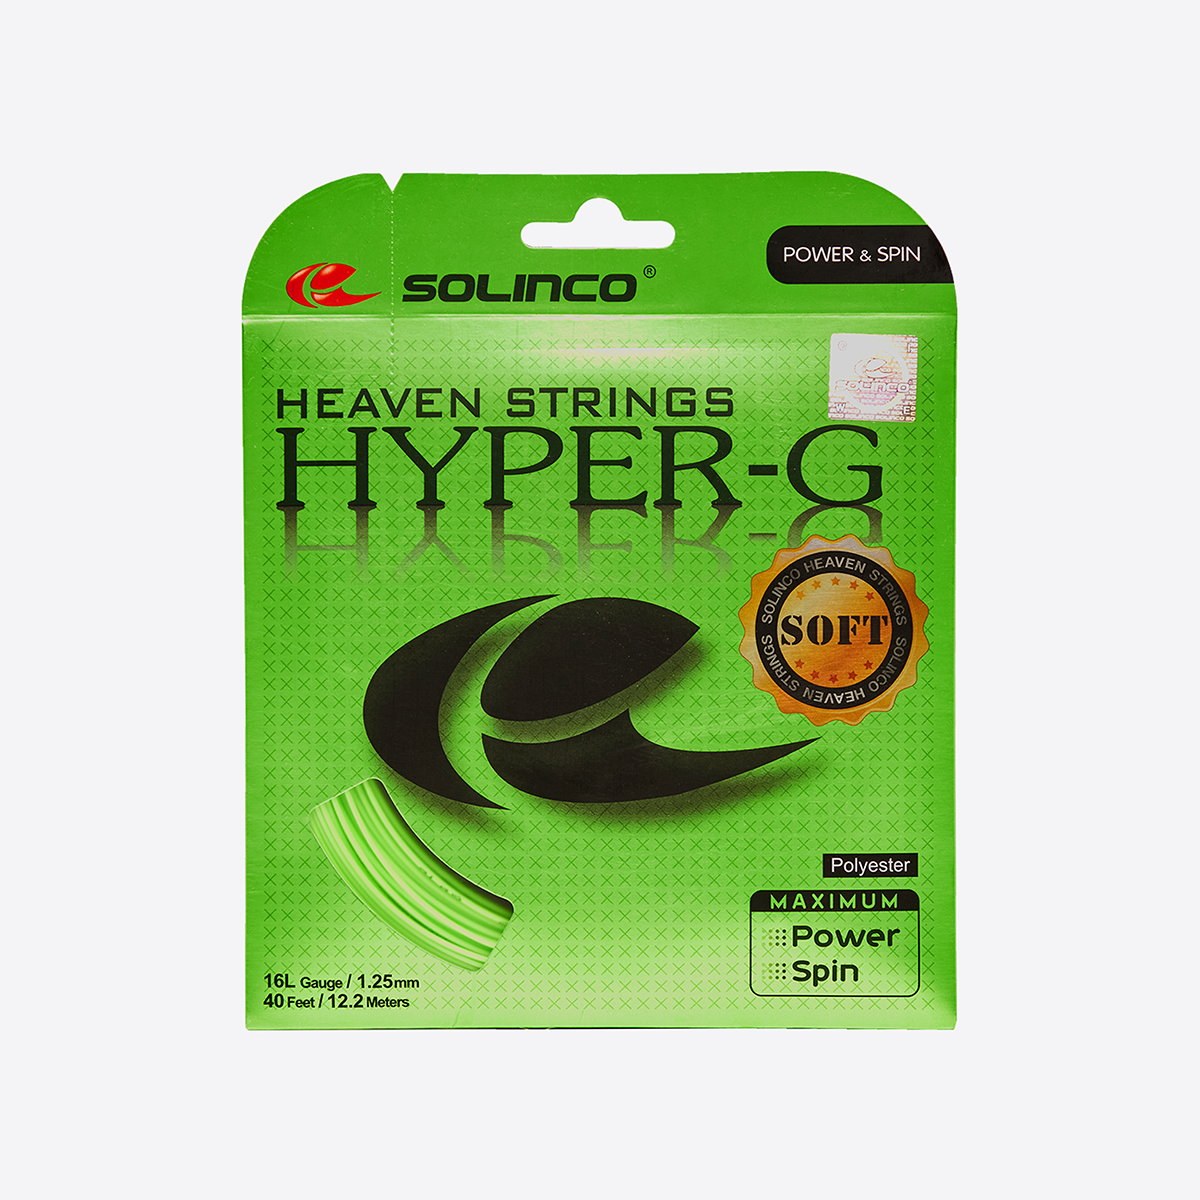 Solinco Hyper-G Soft 1,30 mm 200 M Tennis Strings Tennis Strings Details about    show original title 0,65 €/M 